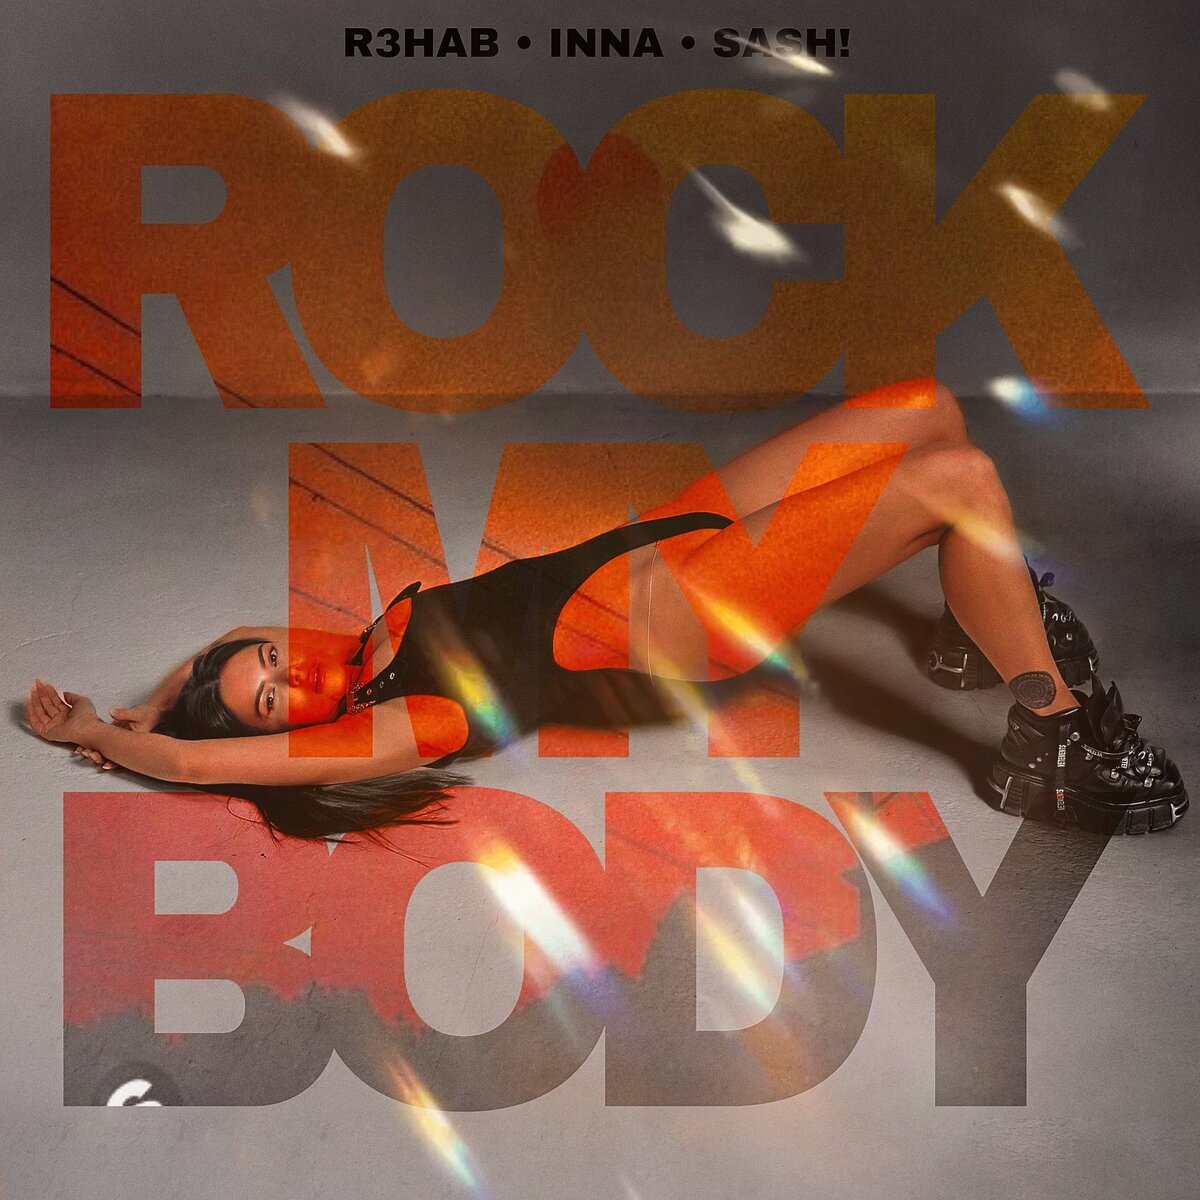 R3hab, Inna, Sash - Rock My Body